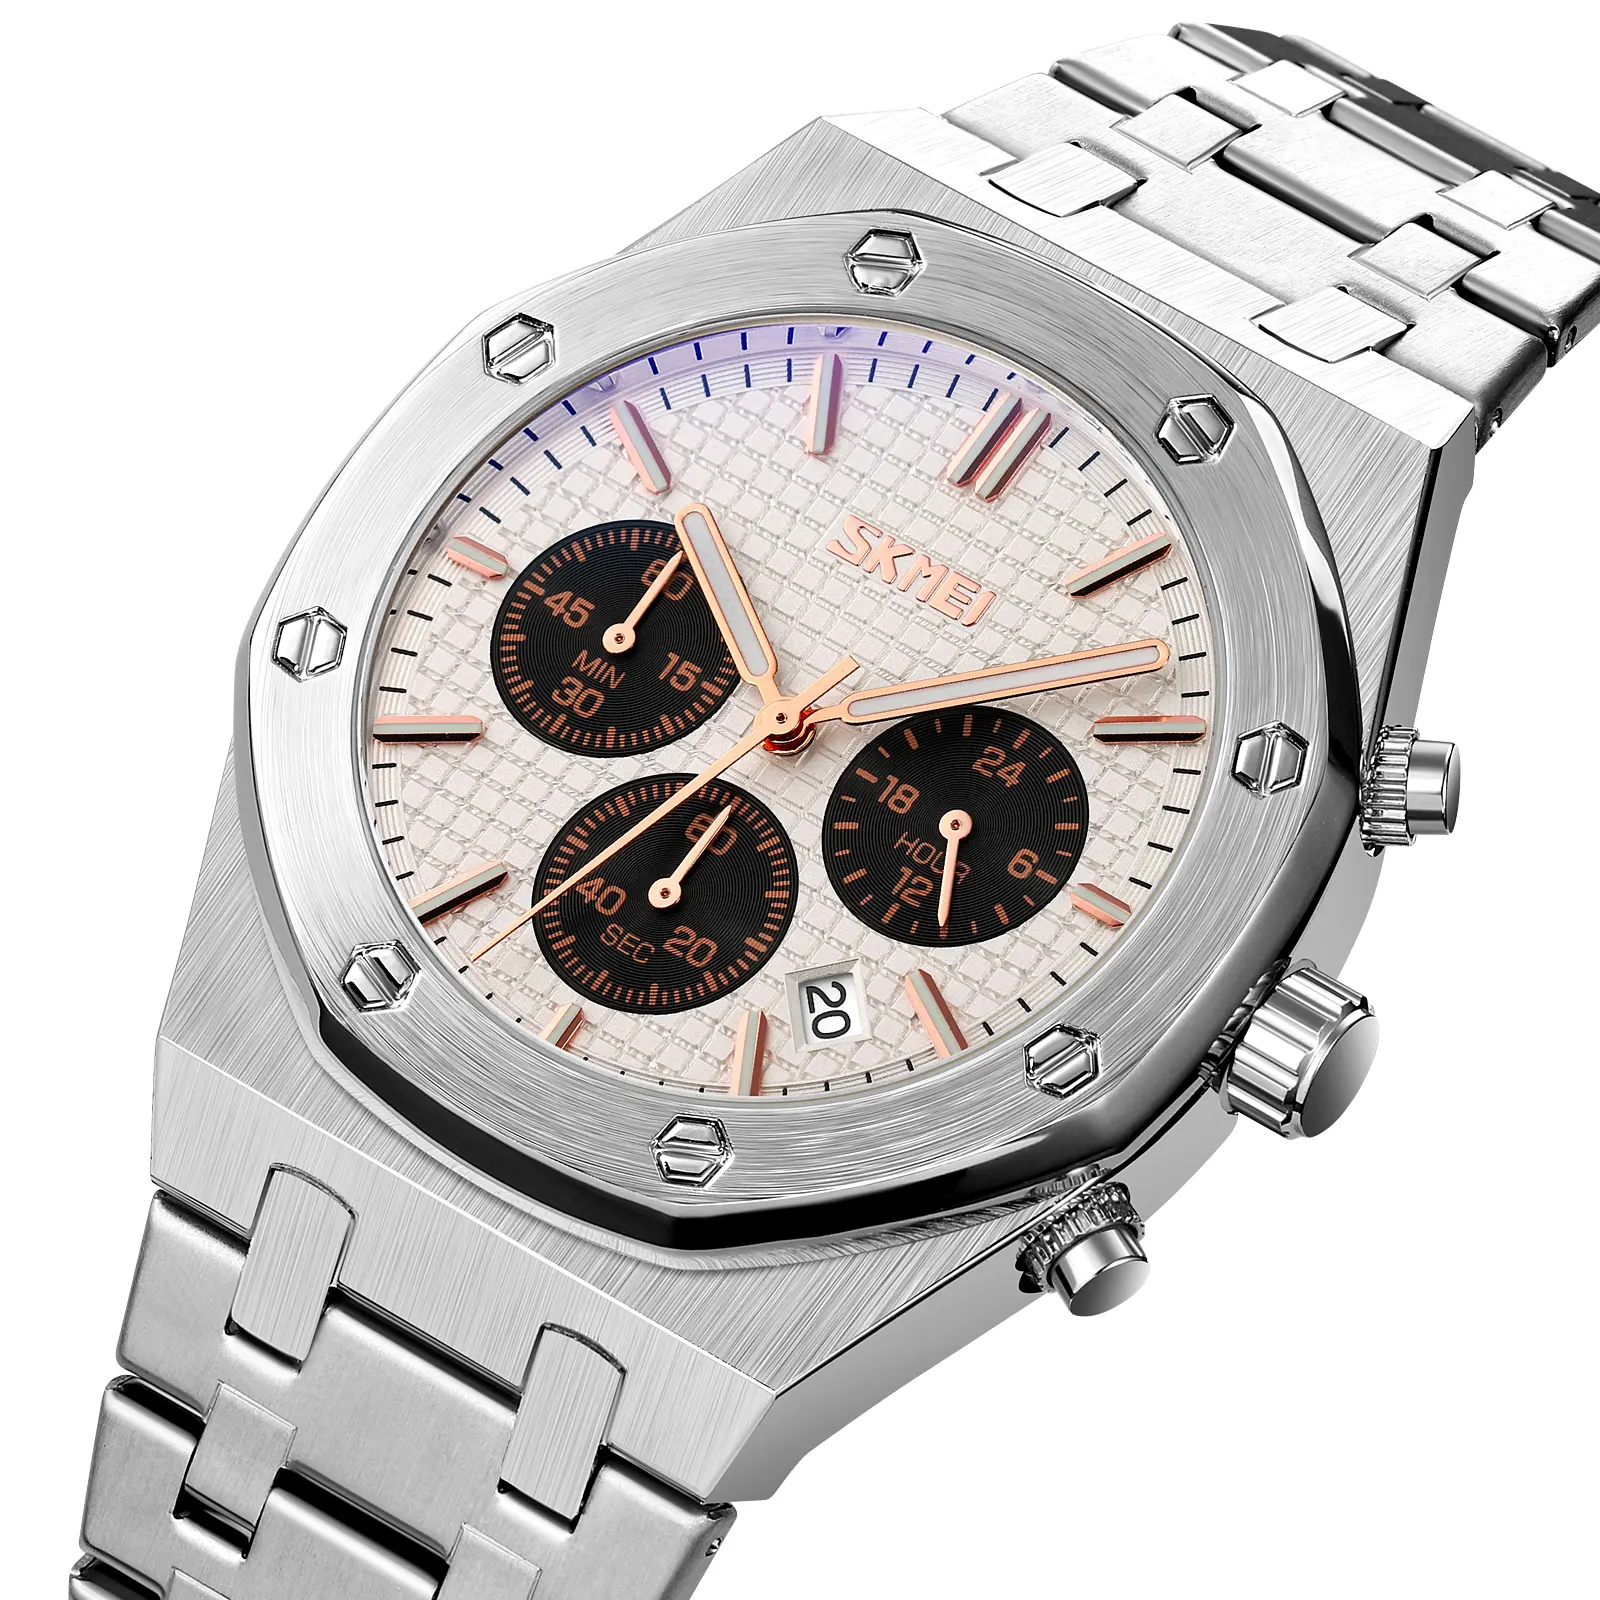 Reloj skmei 9296 Brand Fashion Three Dials New Design Luxury Wrist Watch Quartz Movement Stainless Steel Waterproof Men Watch